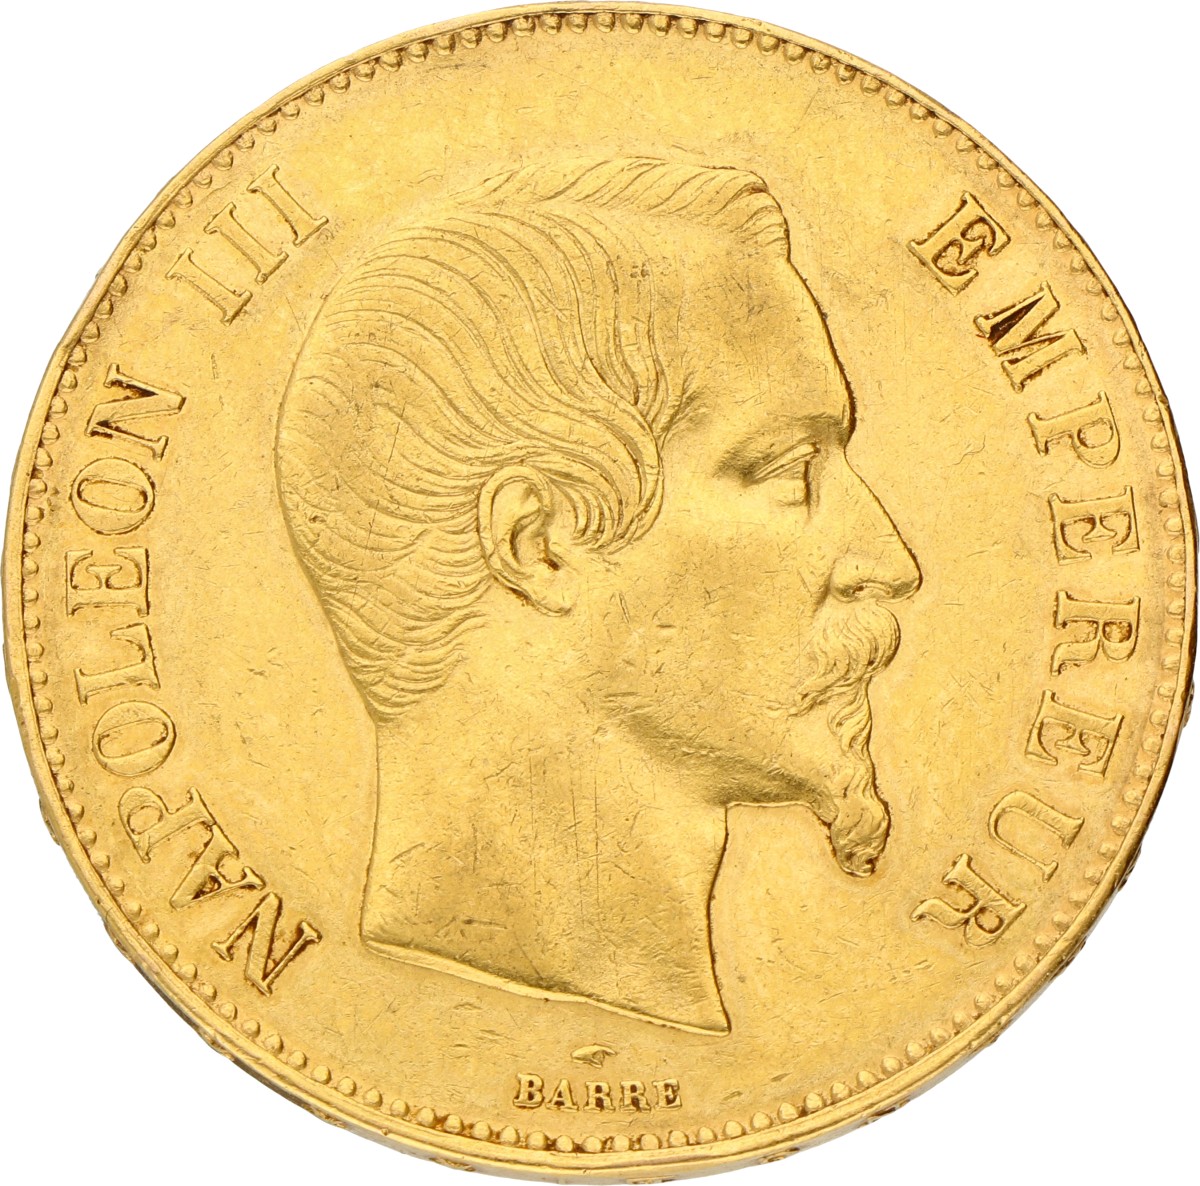 France. Napoleon III. 100 Francs. 1858. VF.